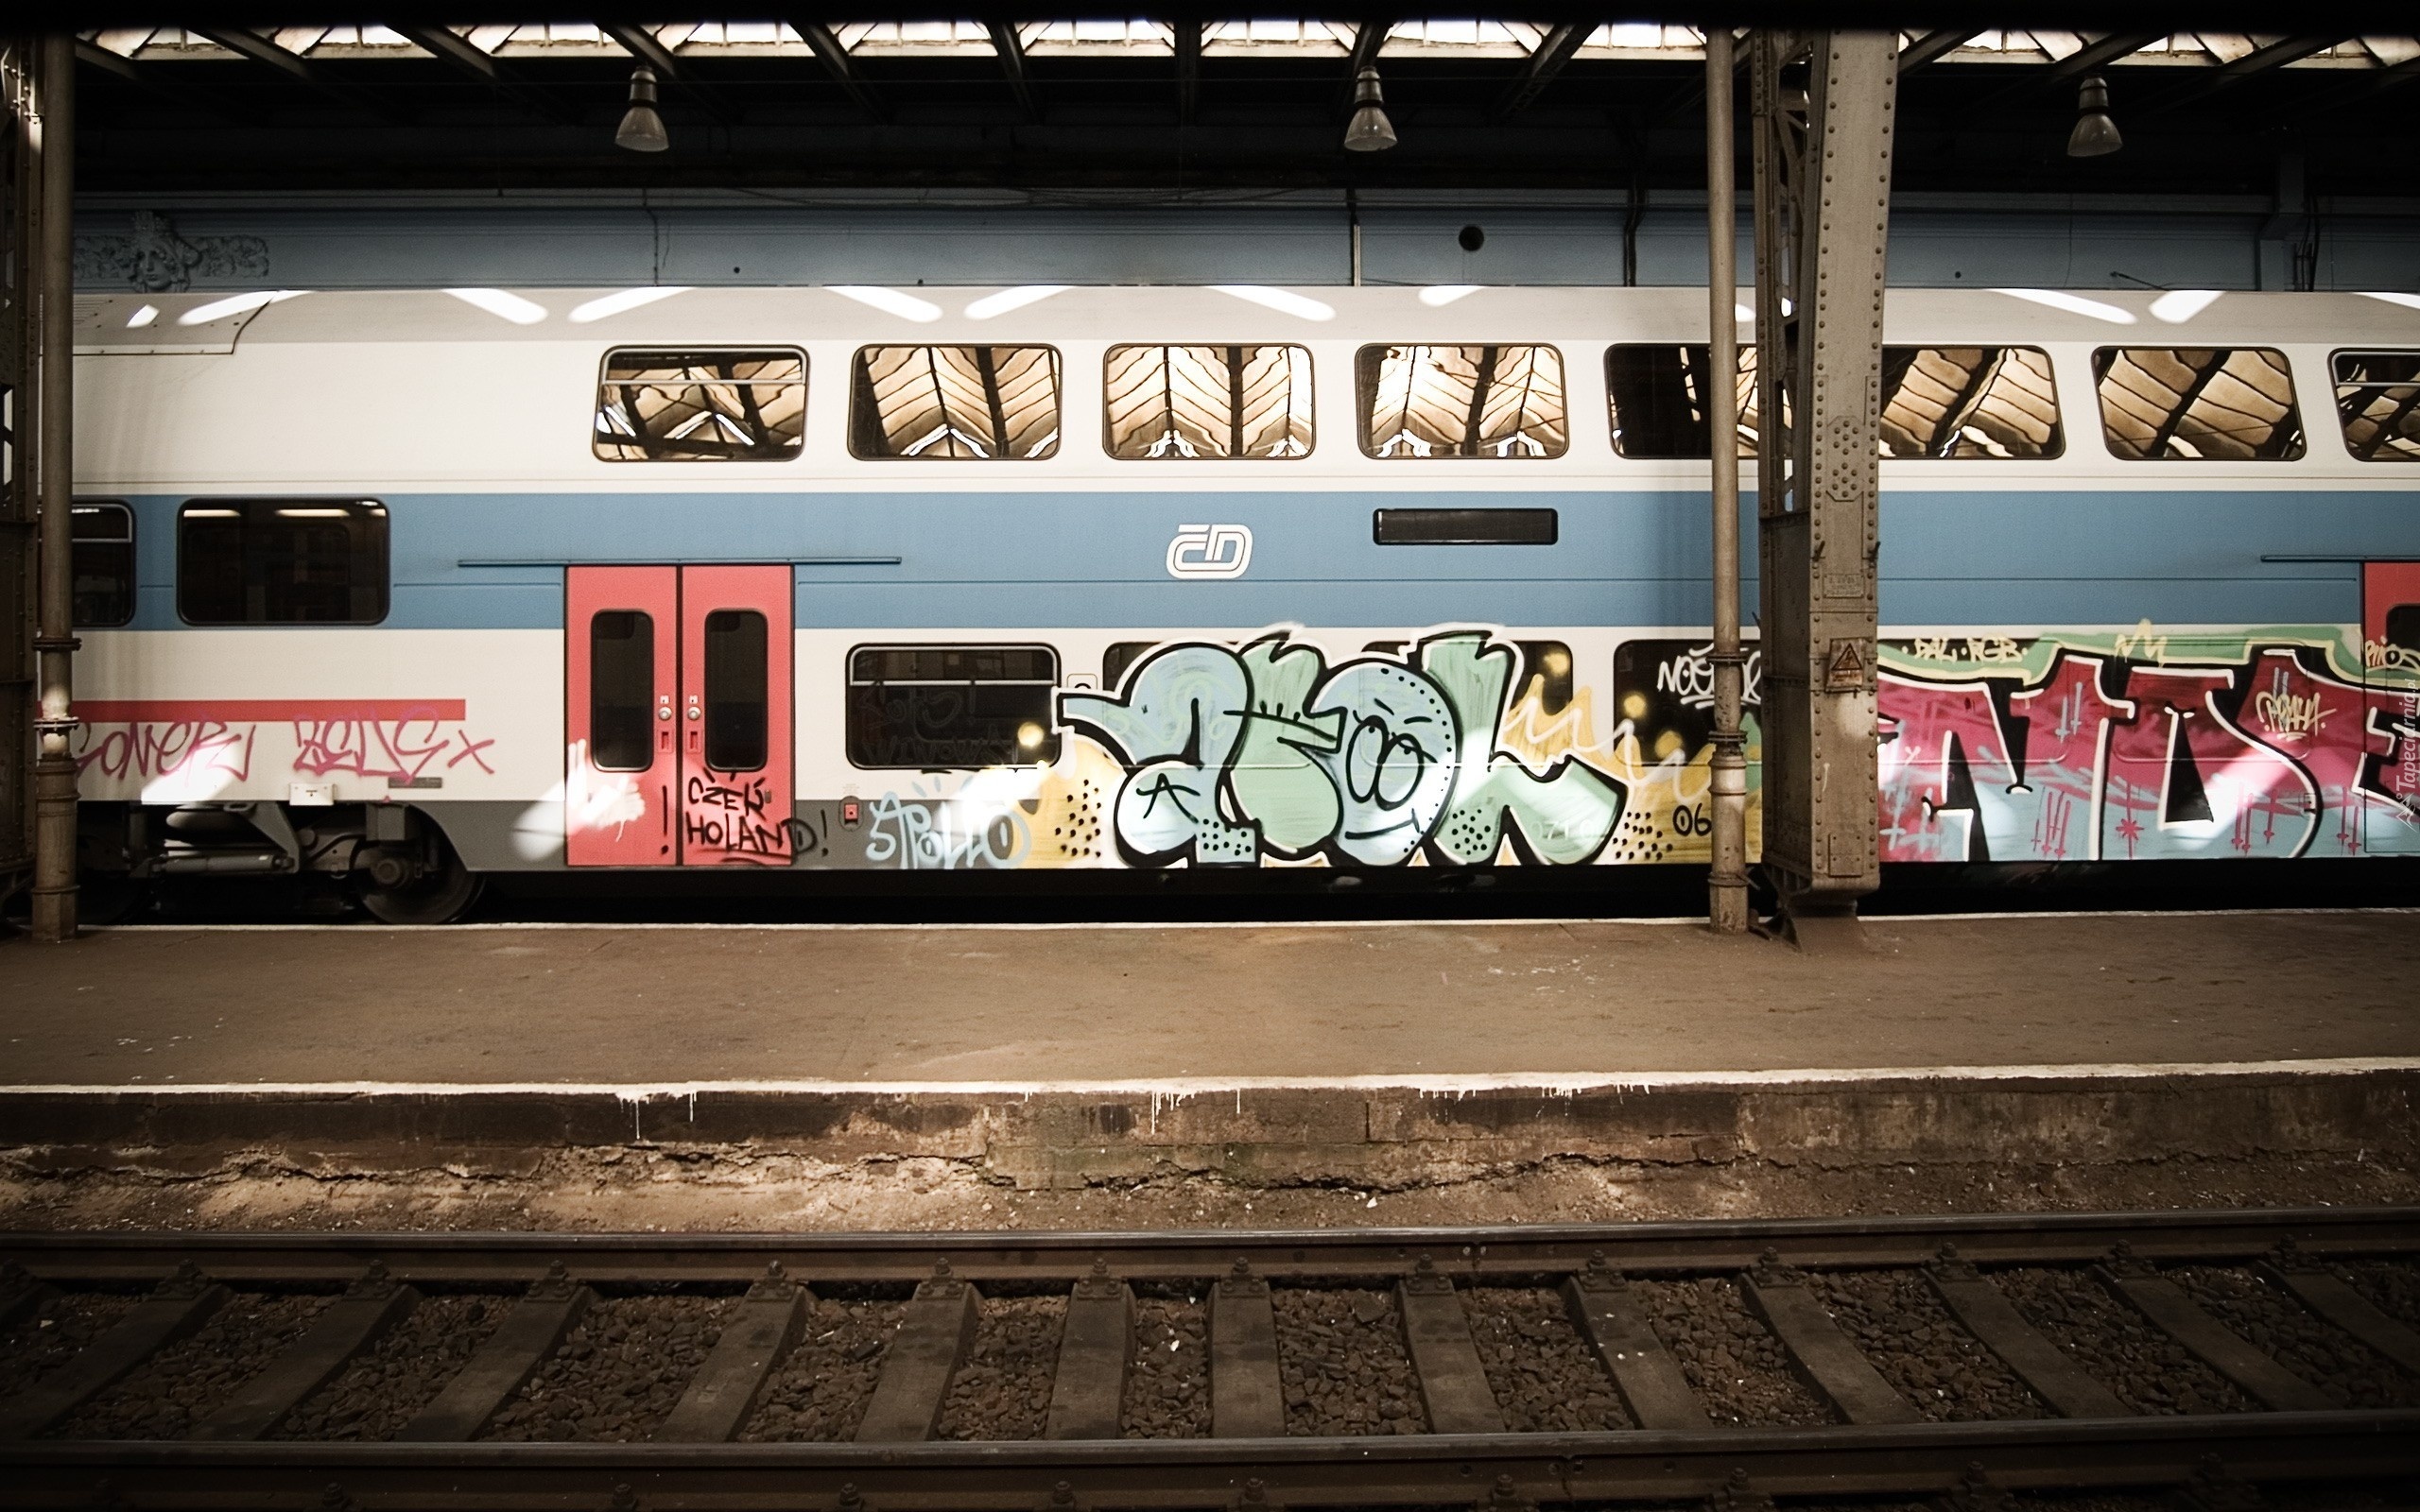 Pociąg, Graffiti, Przystanek